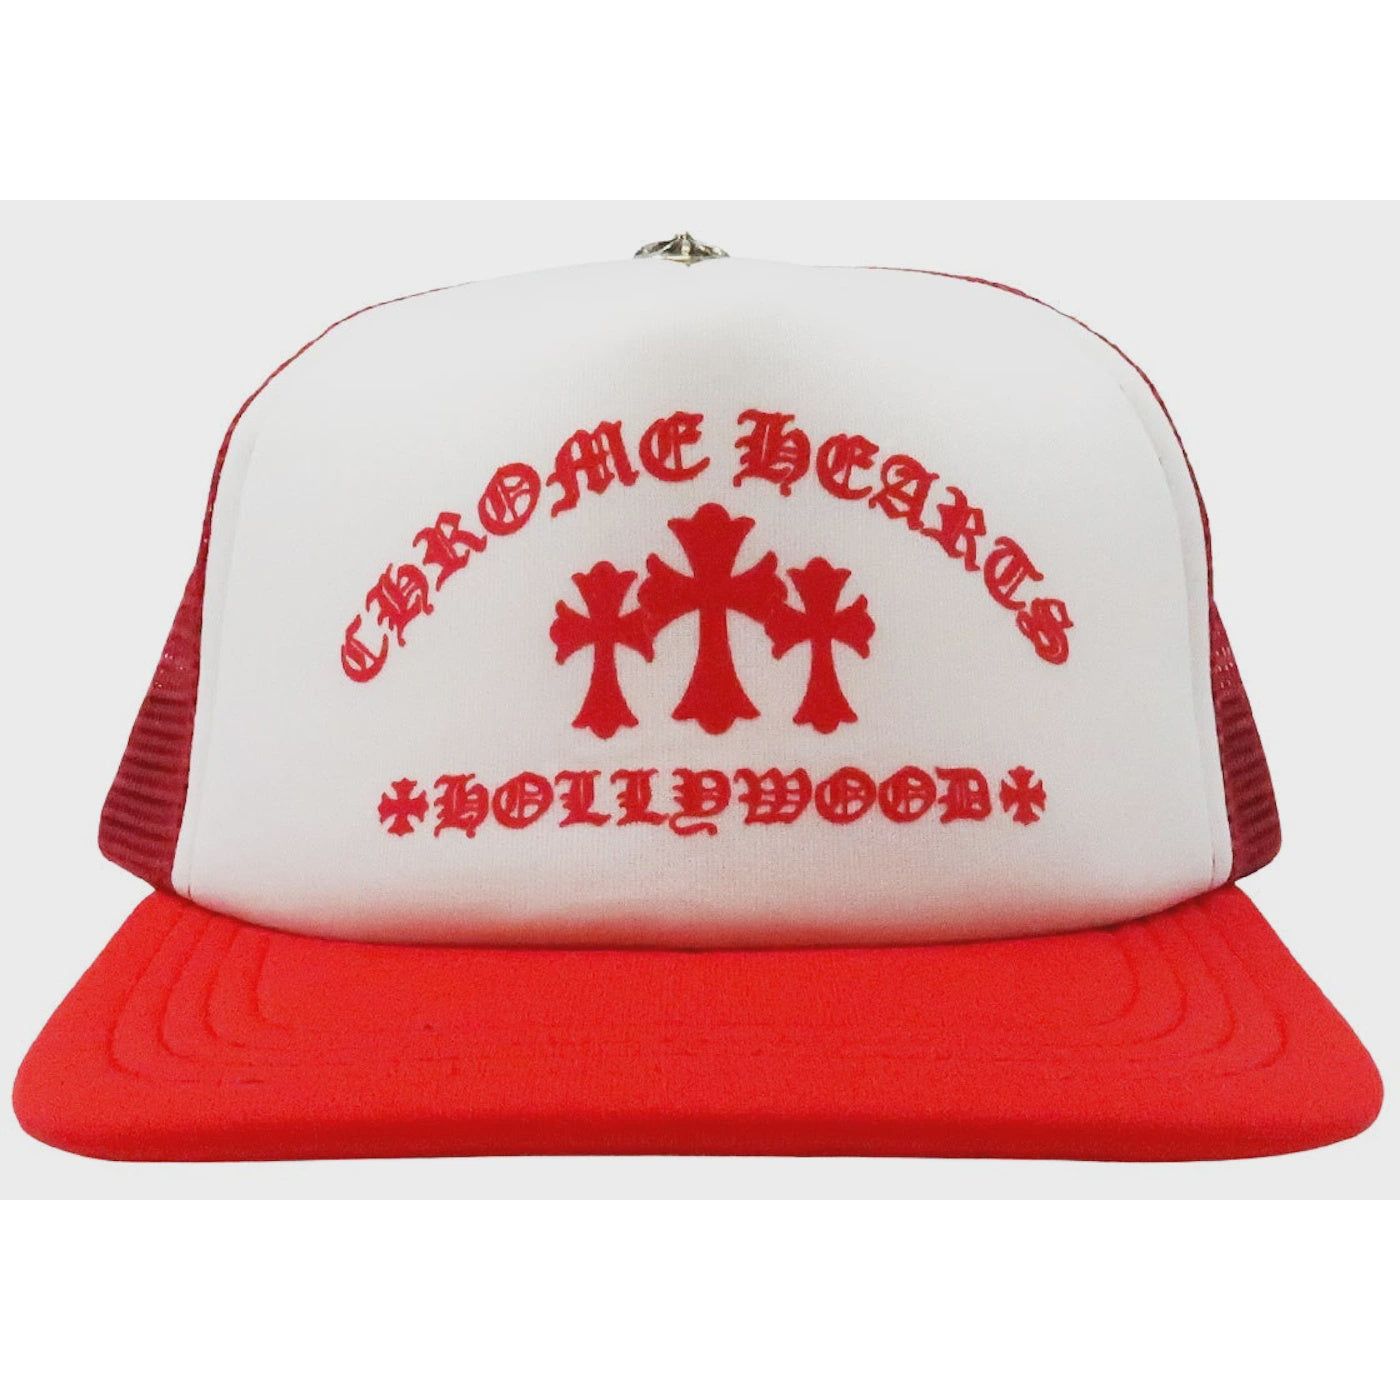 Chrome Hearts King Taco Trucker Hat - Red/White